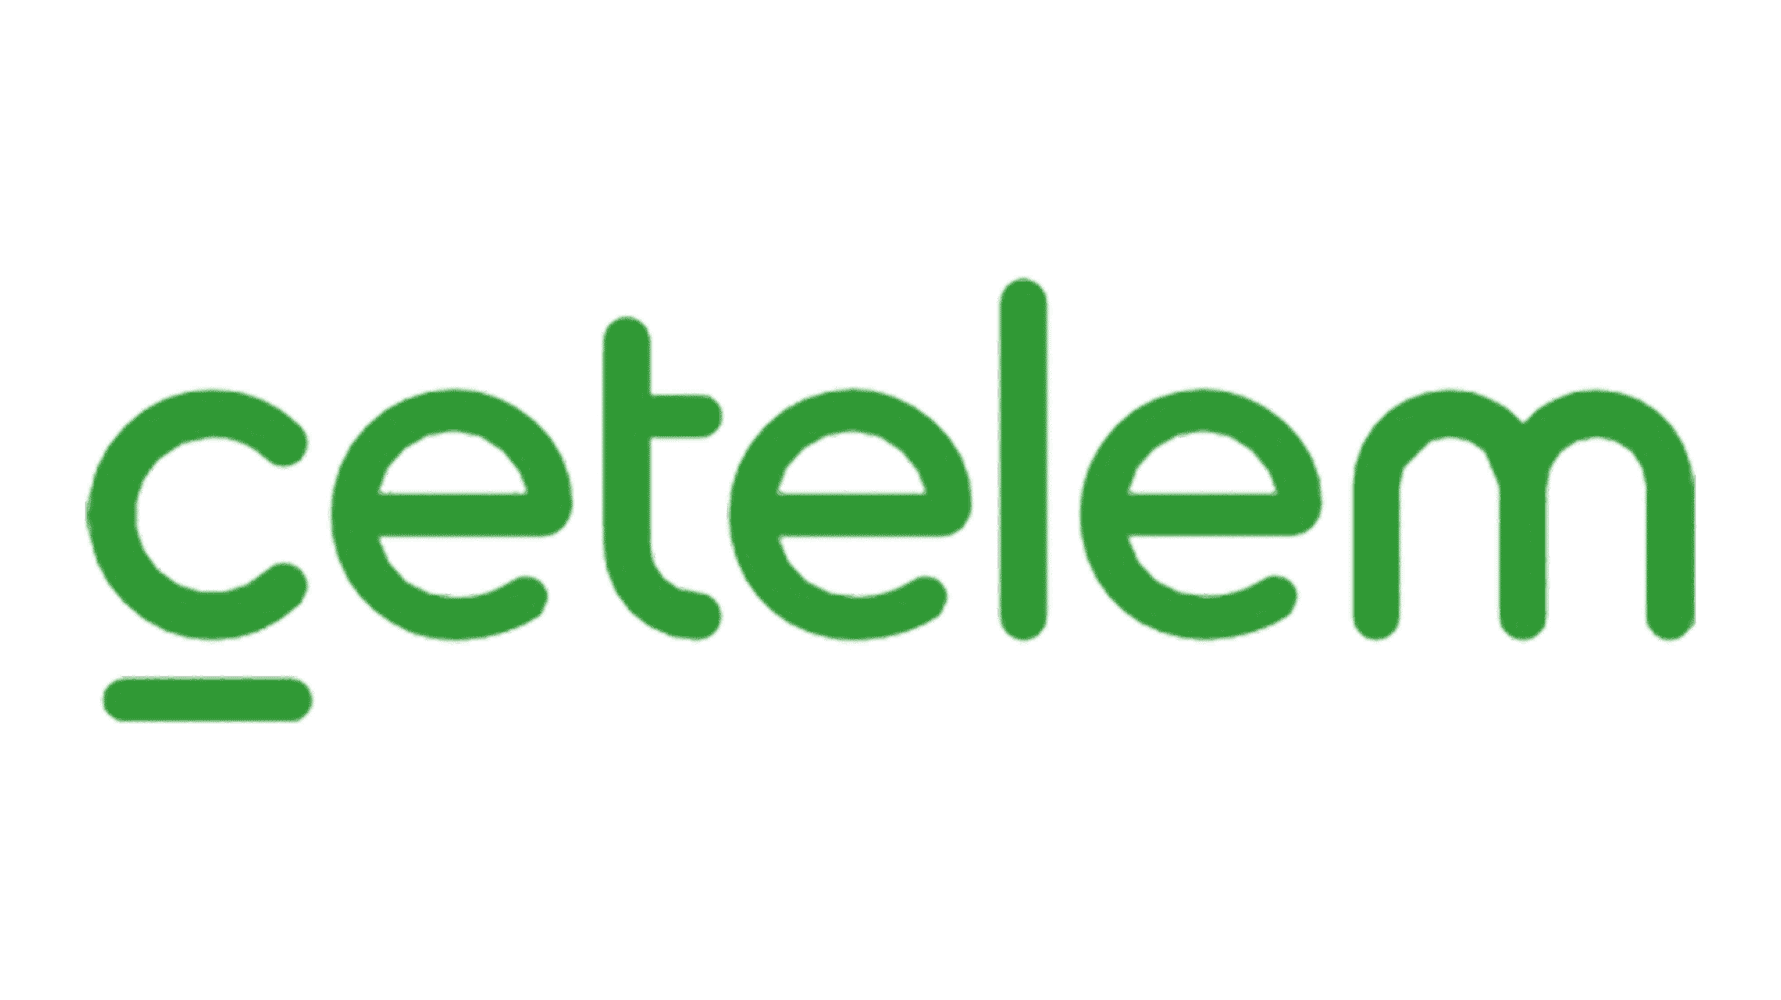 logo-cetelem